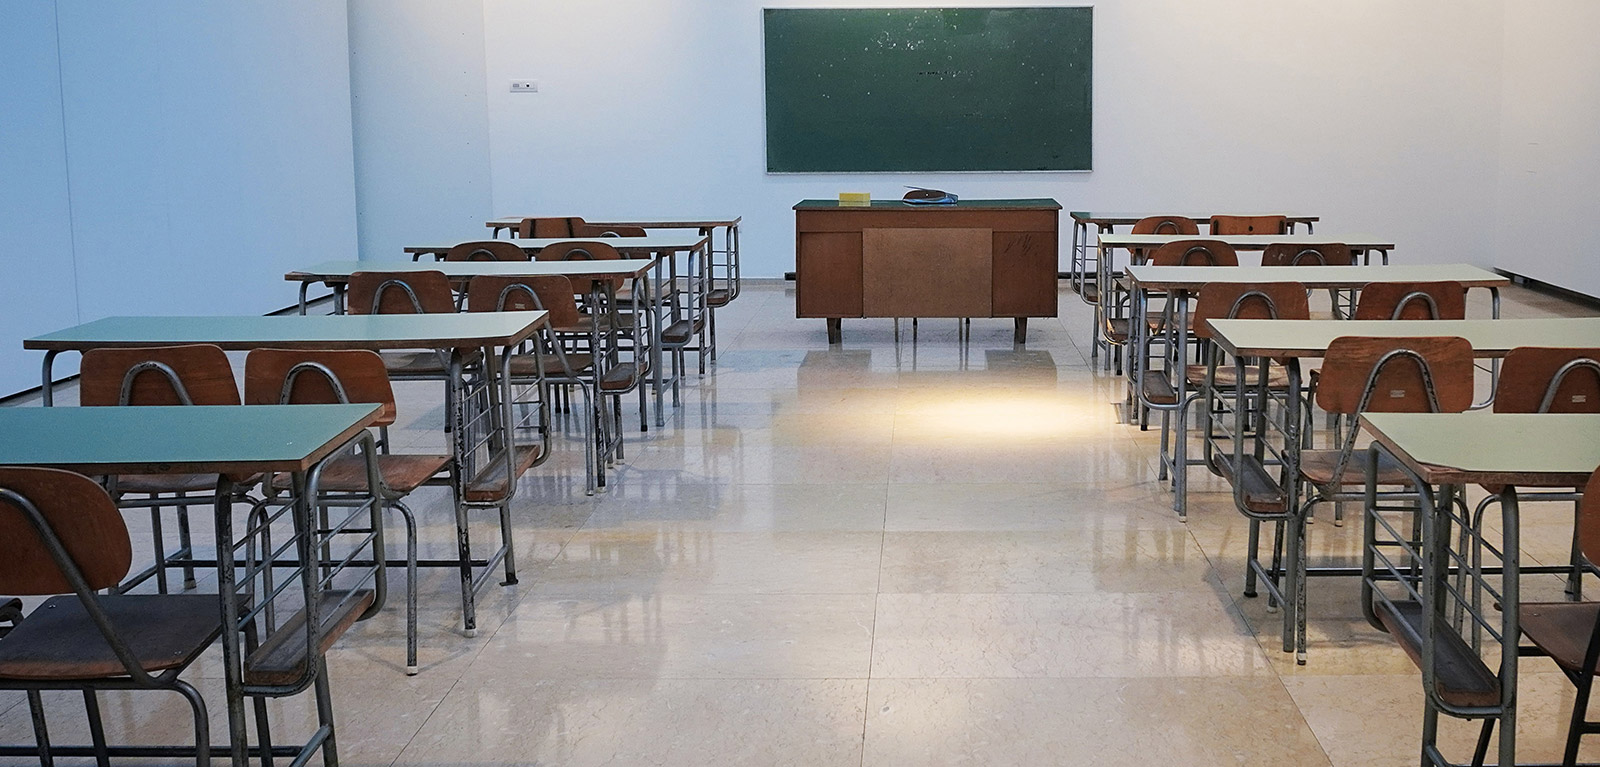 Empty desks in an empty classroom